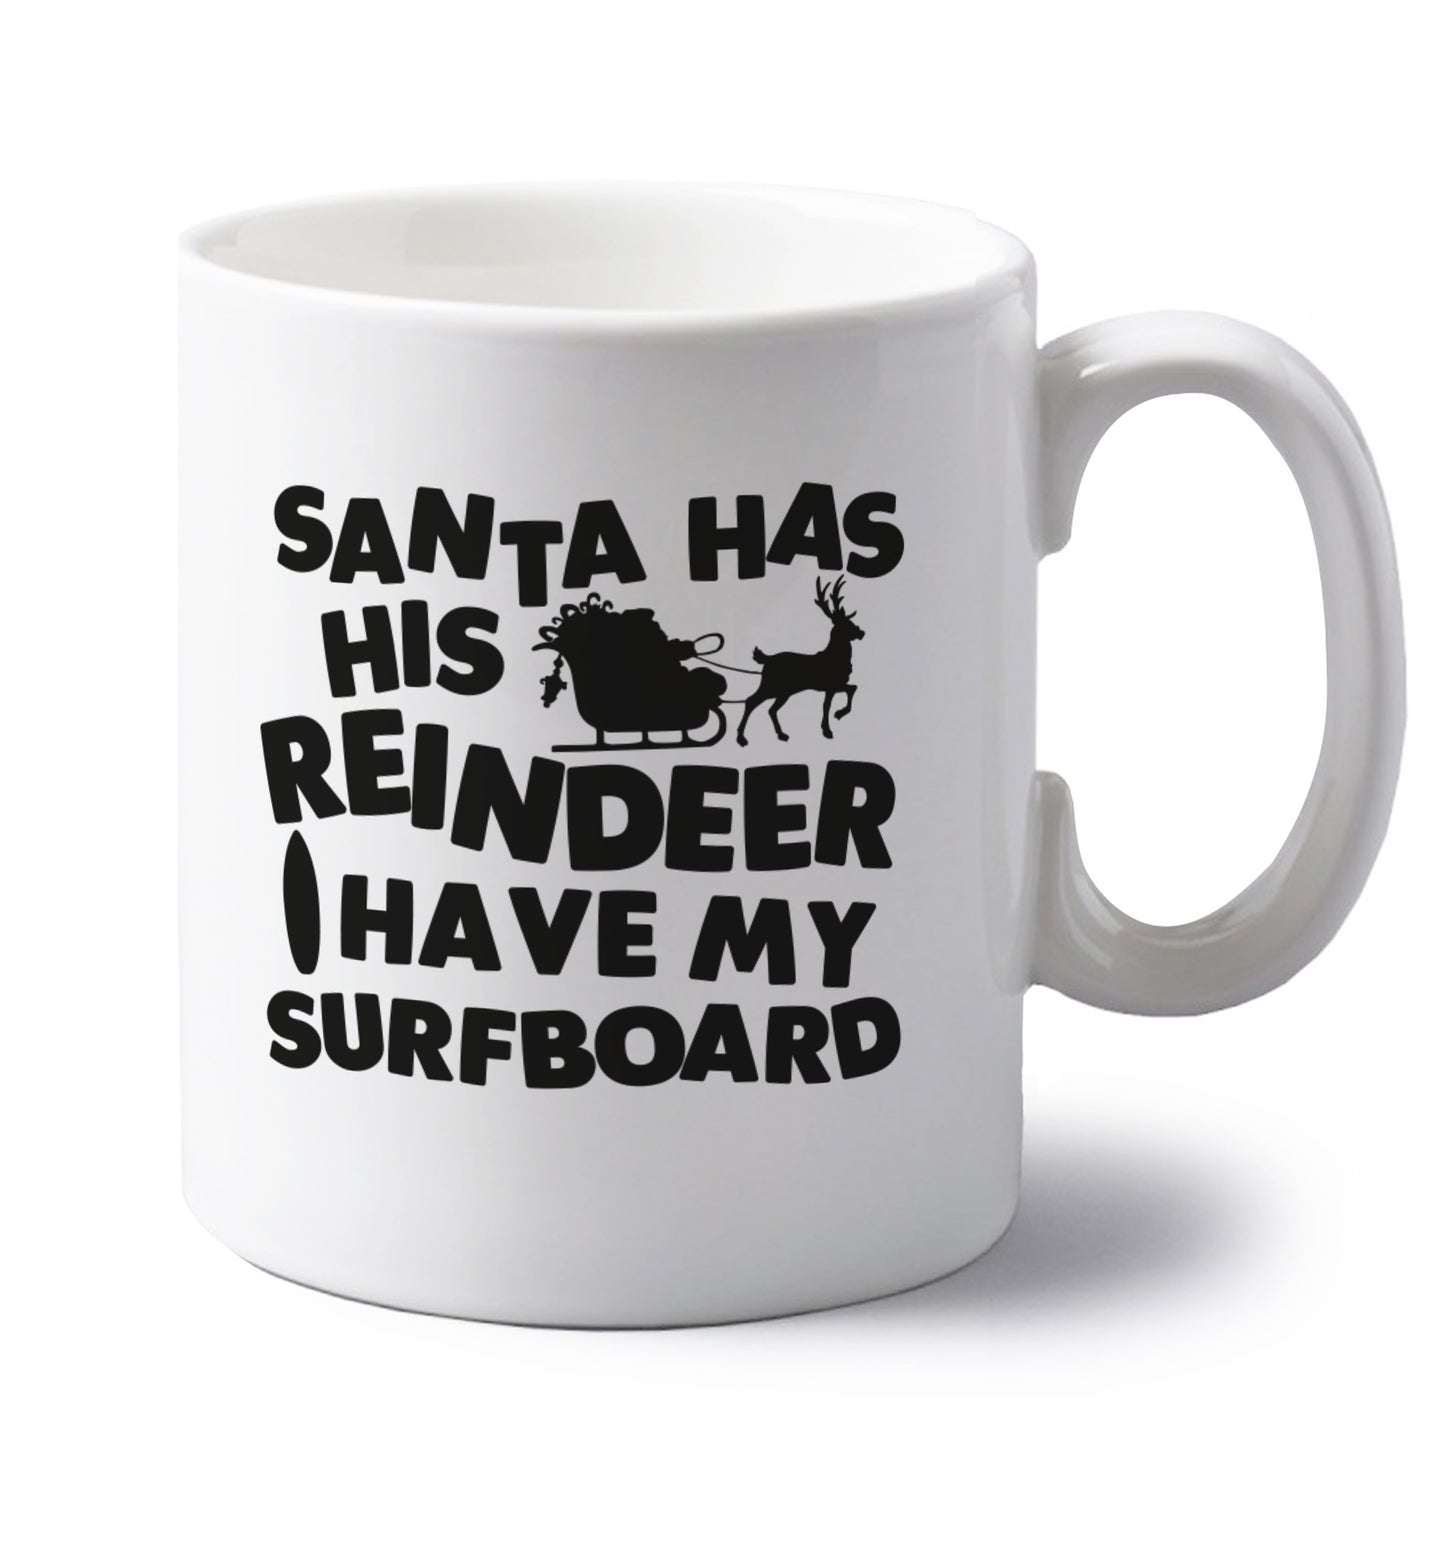 Santa has his reindeer I have my surfboard left handed white ceramic mug 